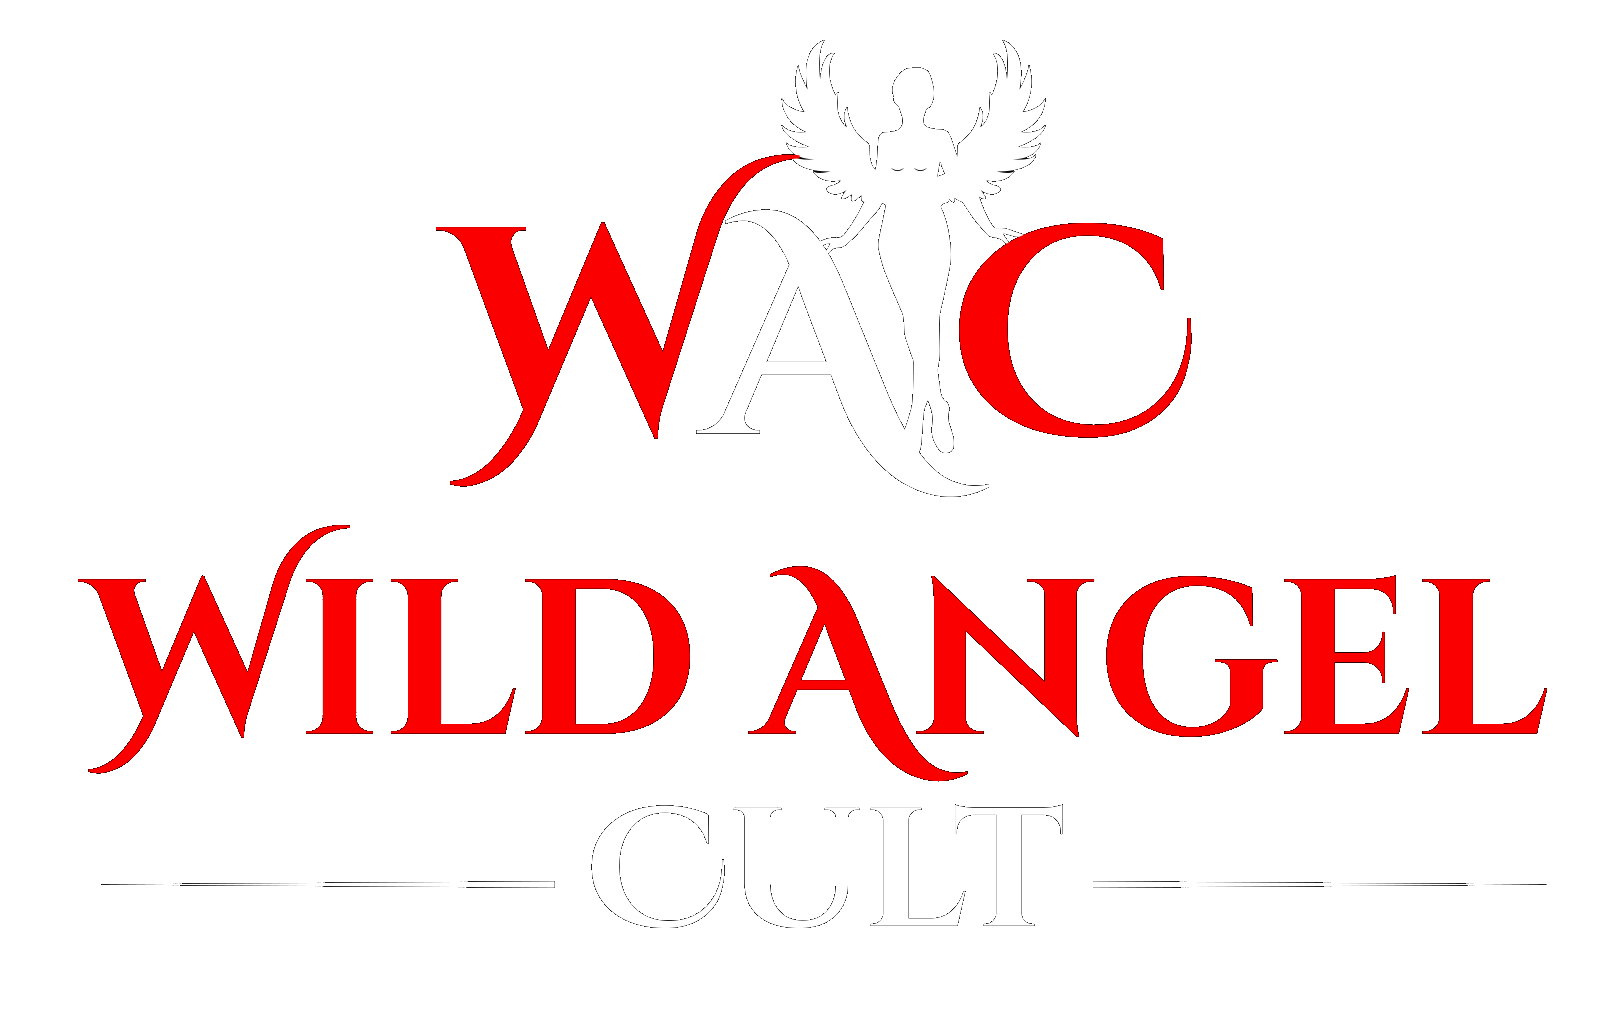 Wild Angel Cult